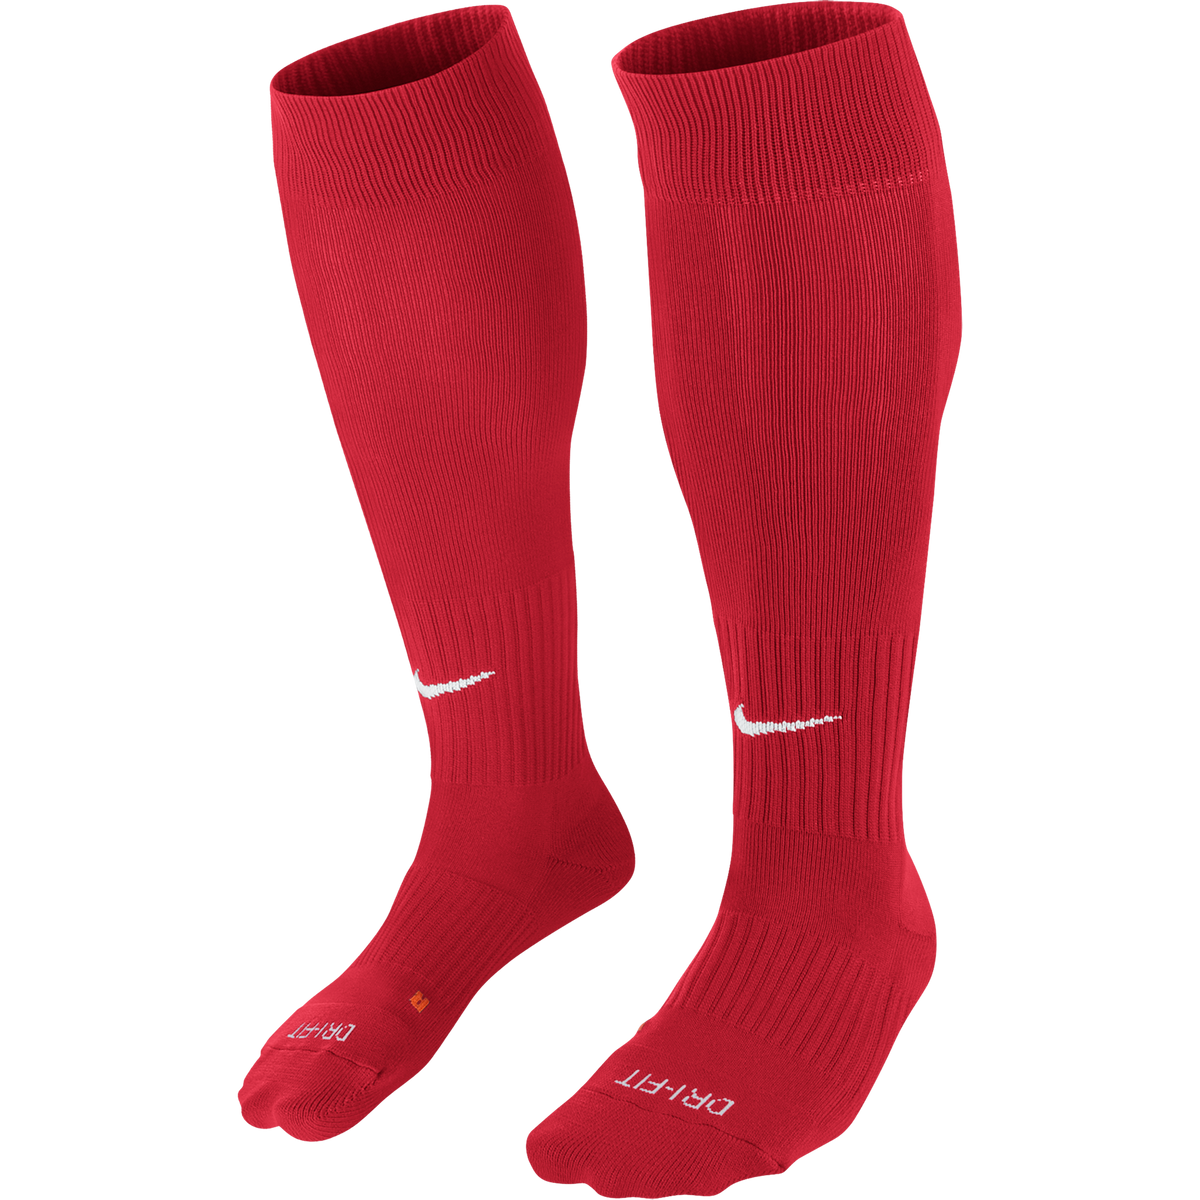 Star Soccer - Classic Socks